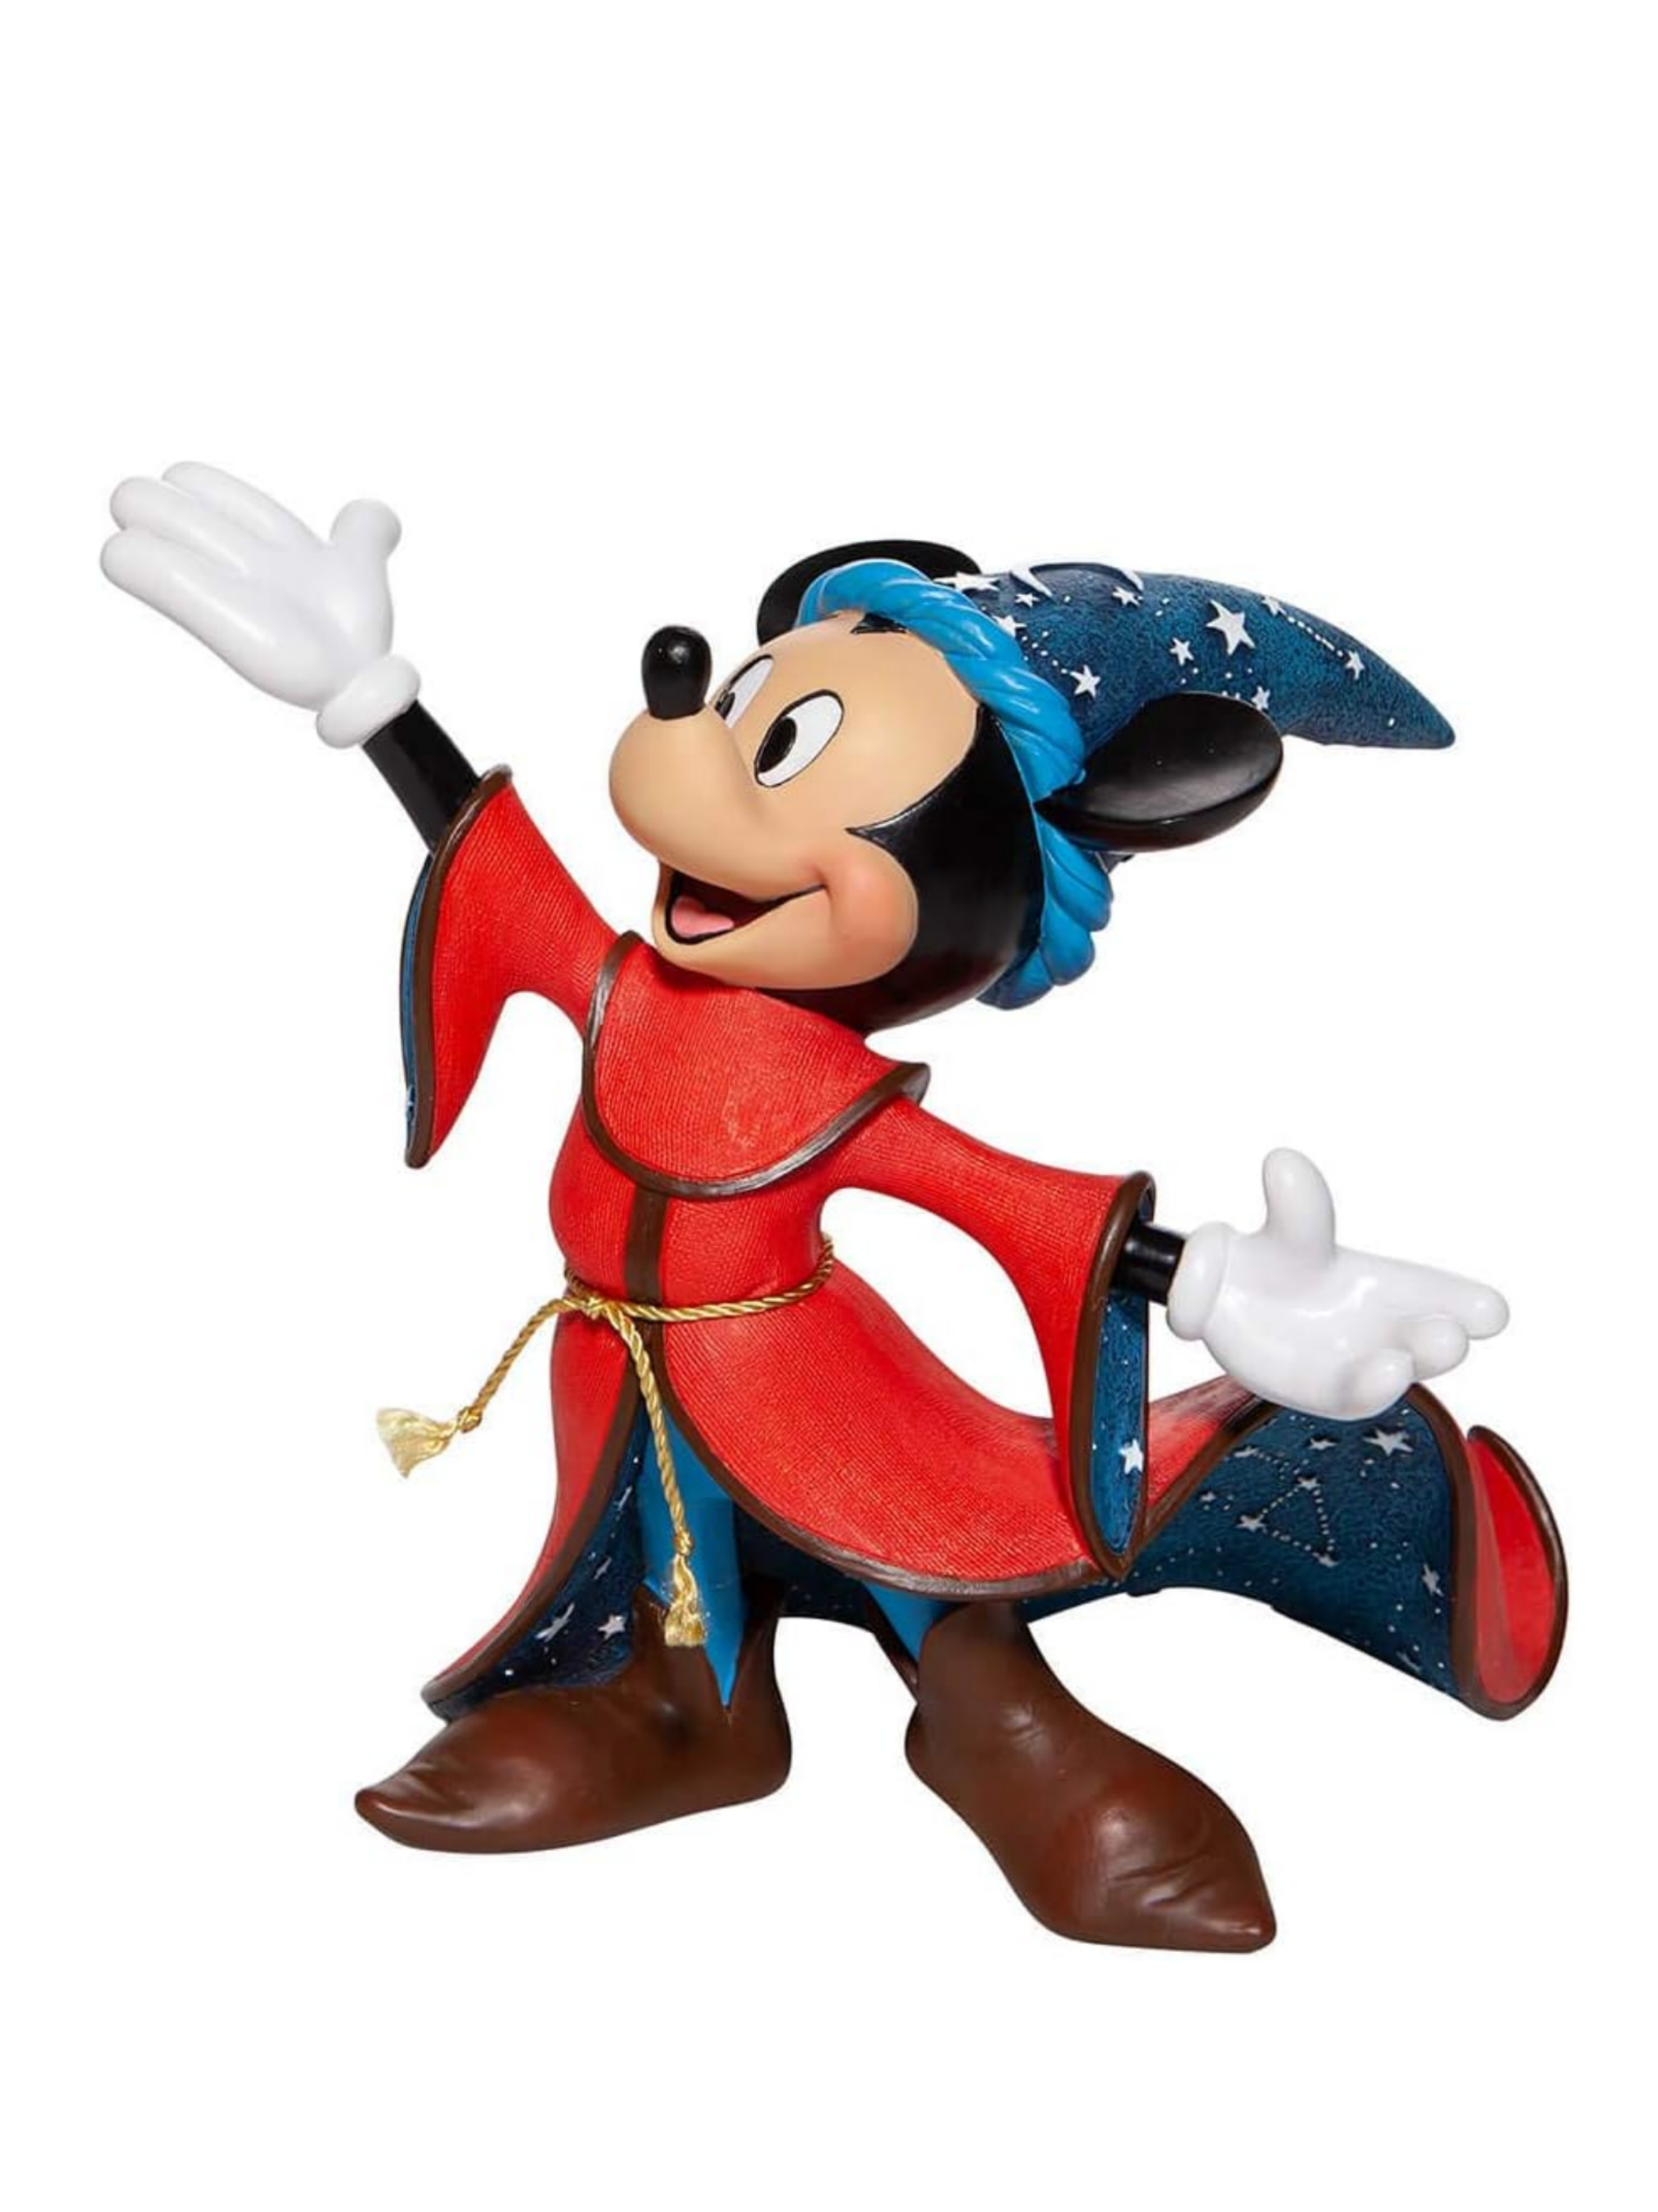 Fantasia 80. Jahrestag Zauberlehrling Micky Maus Figur, 22 cm, Mehrfarbig